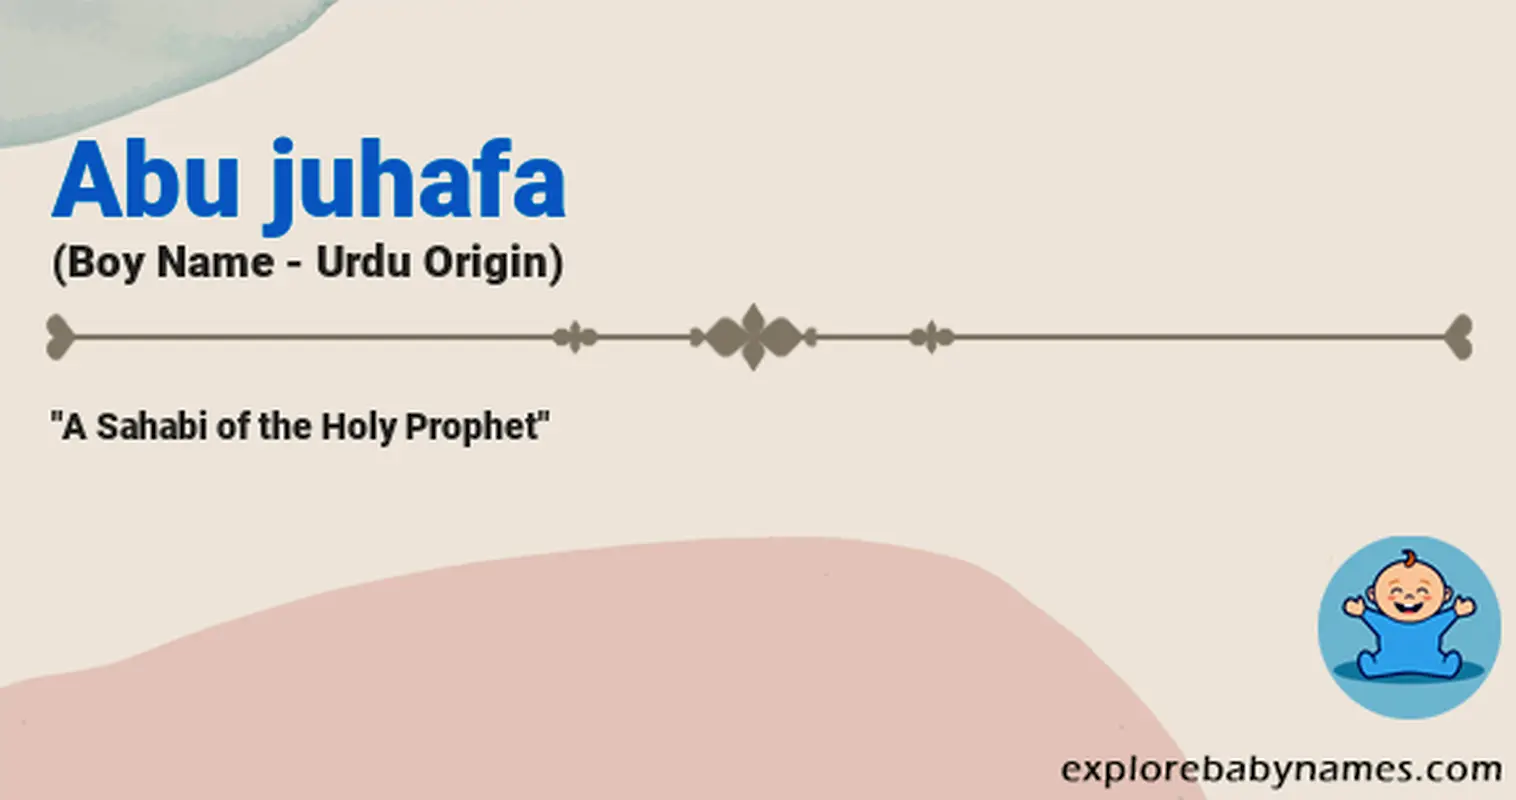 Meaning of Abu juhafa